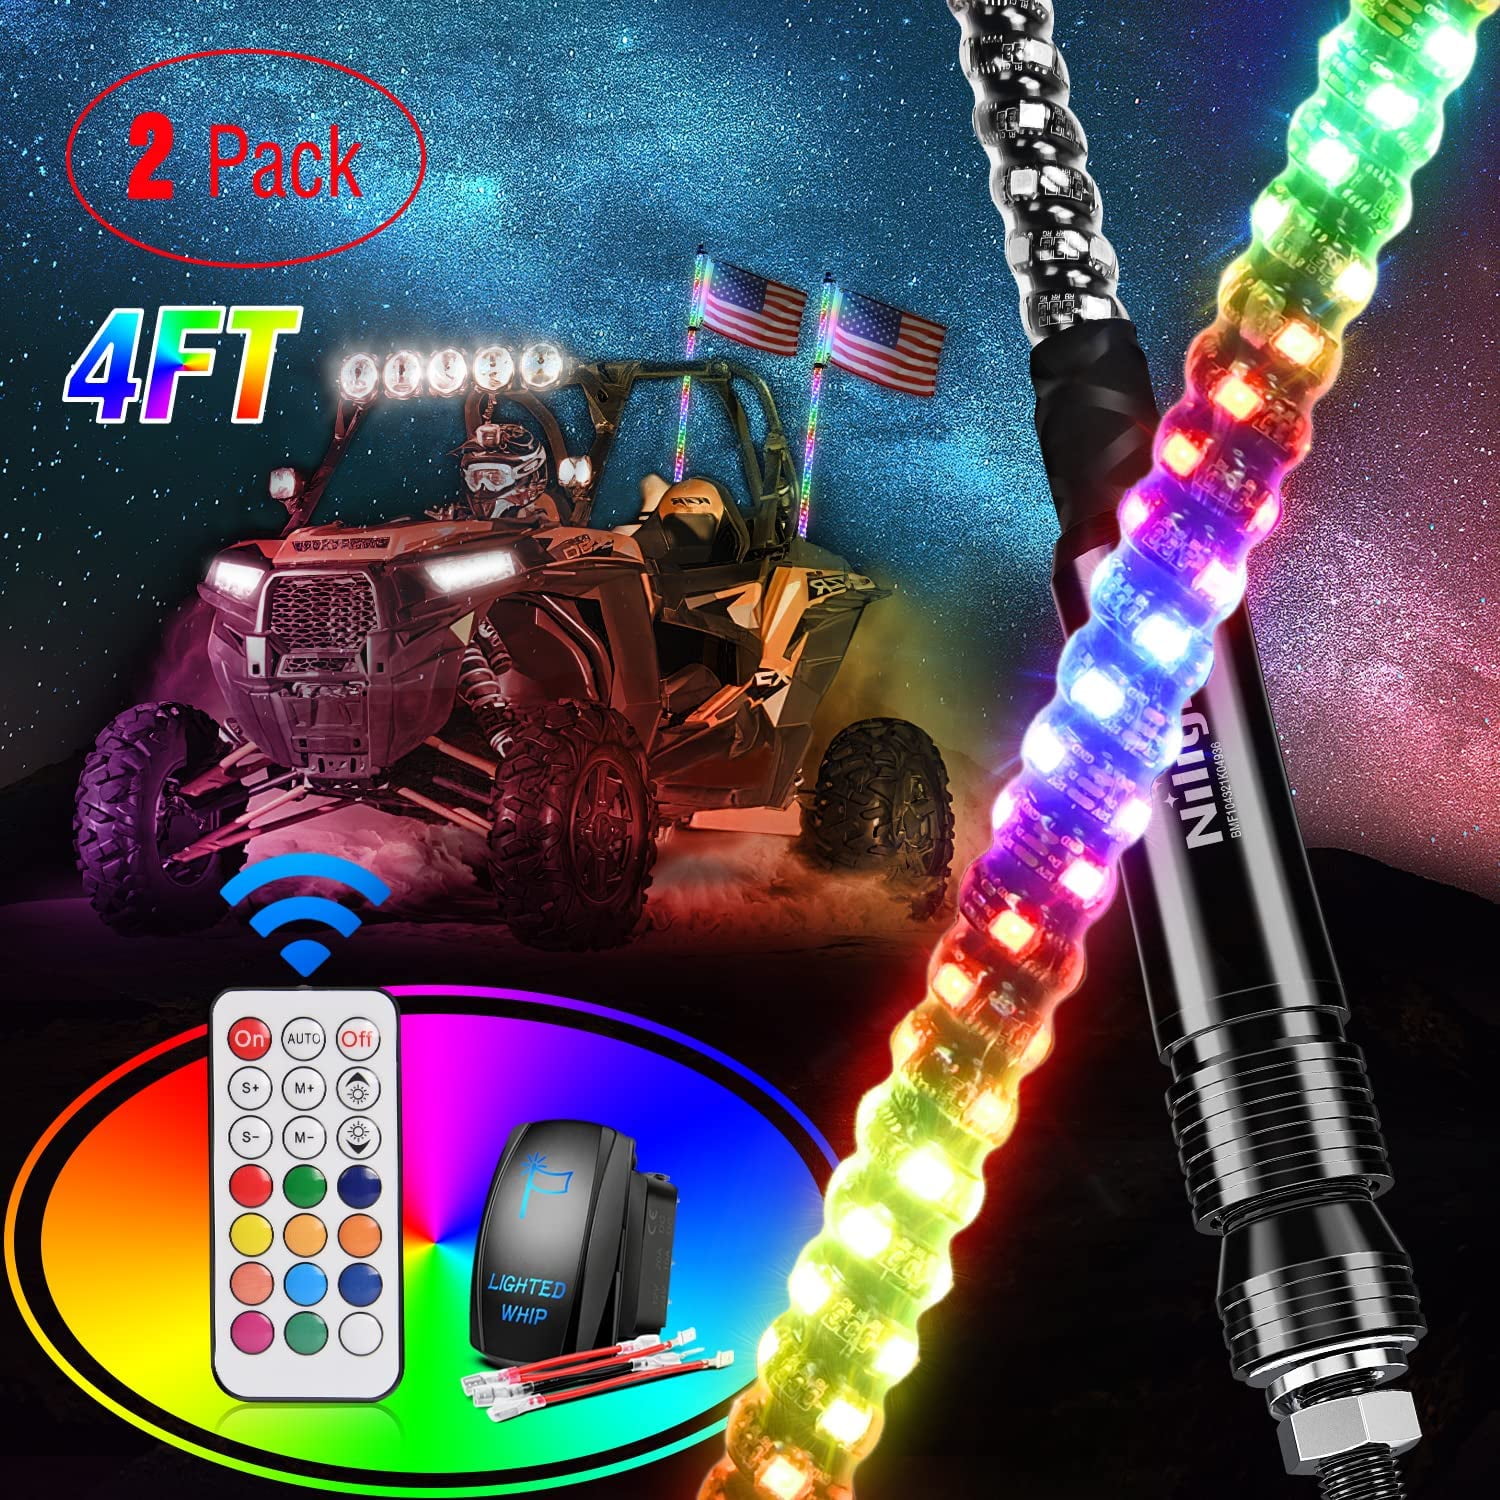 Xprite 4FT Quick Release LED Whip Lights Remote Control Multi-color RGB UTV ATV